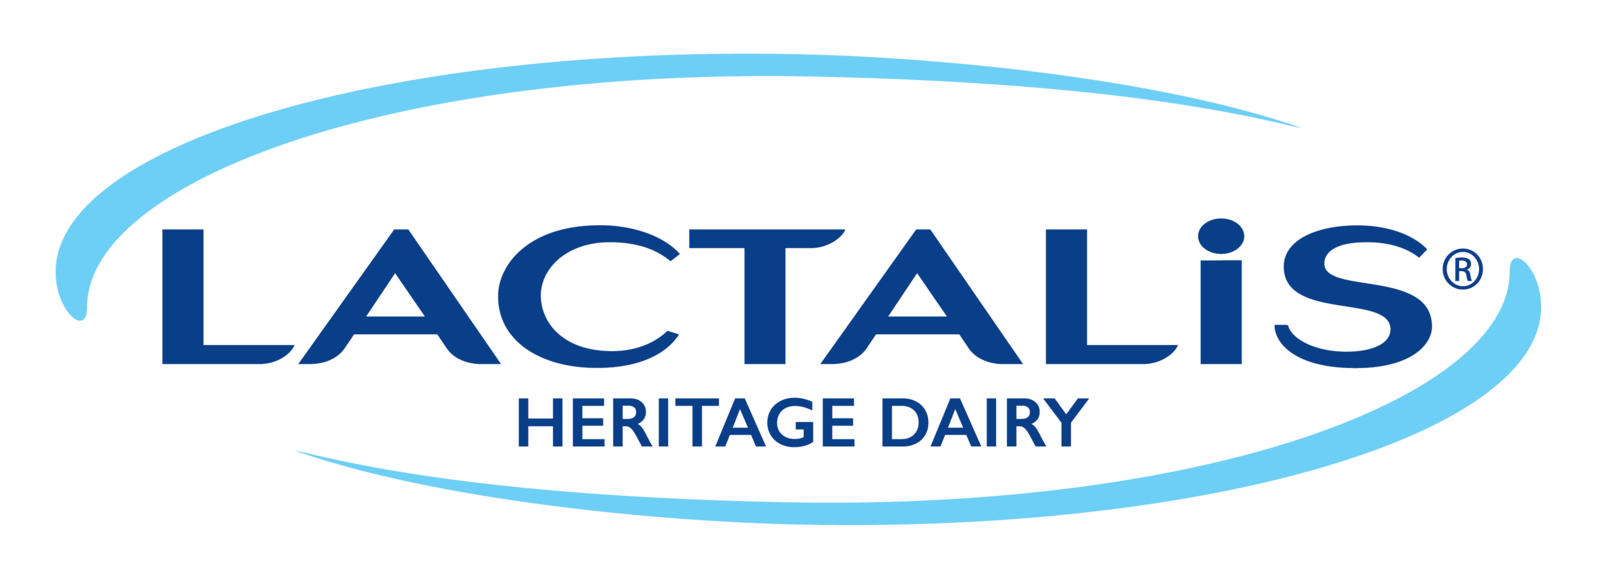 Lactalis Heritage Dairy